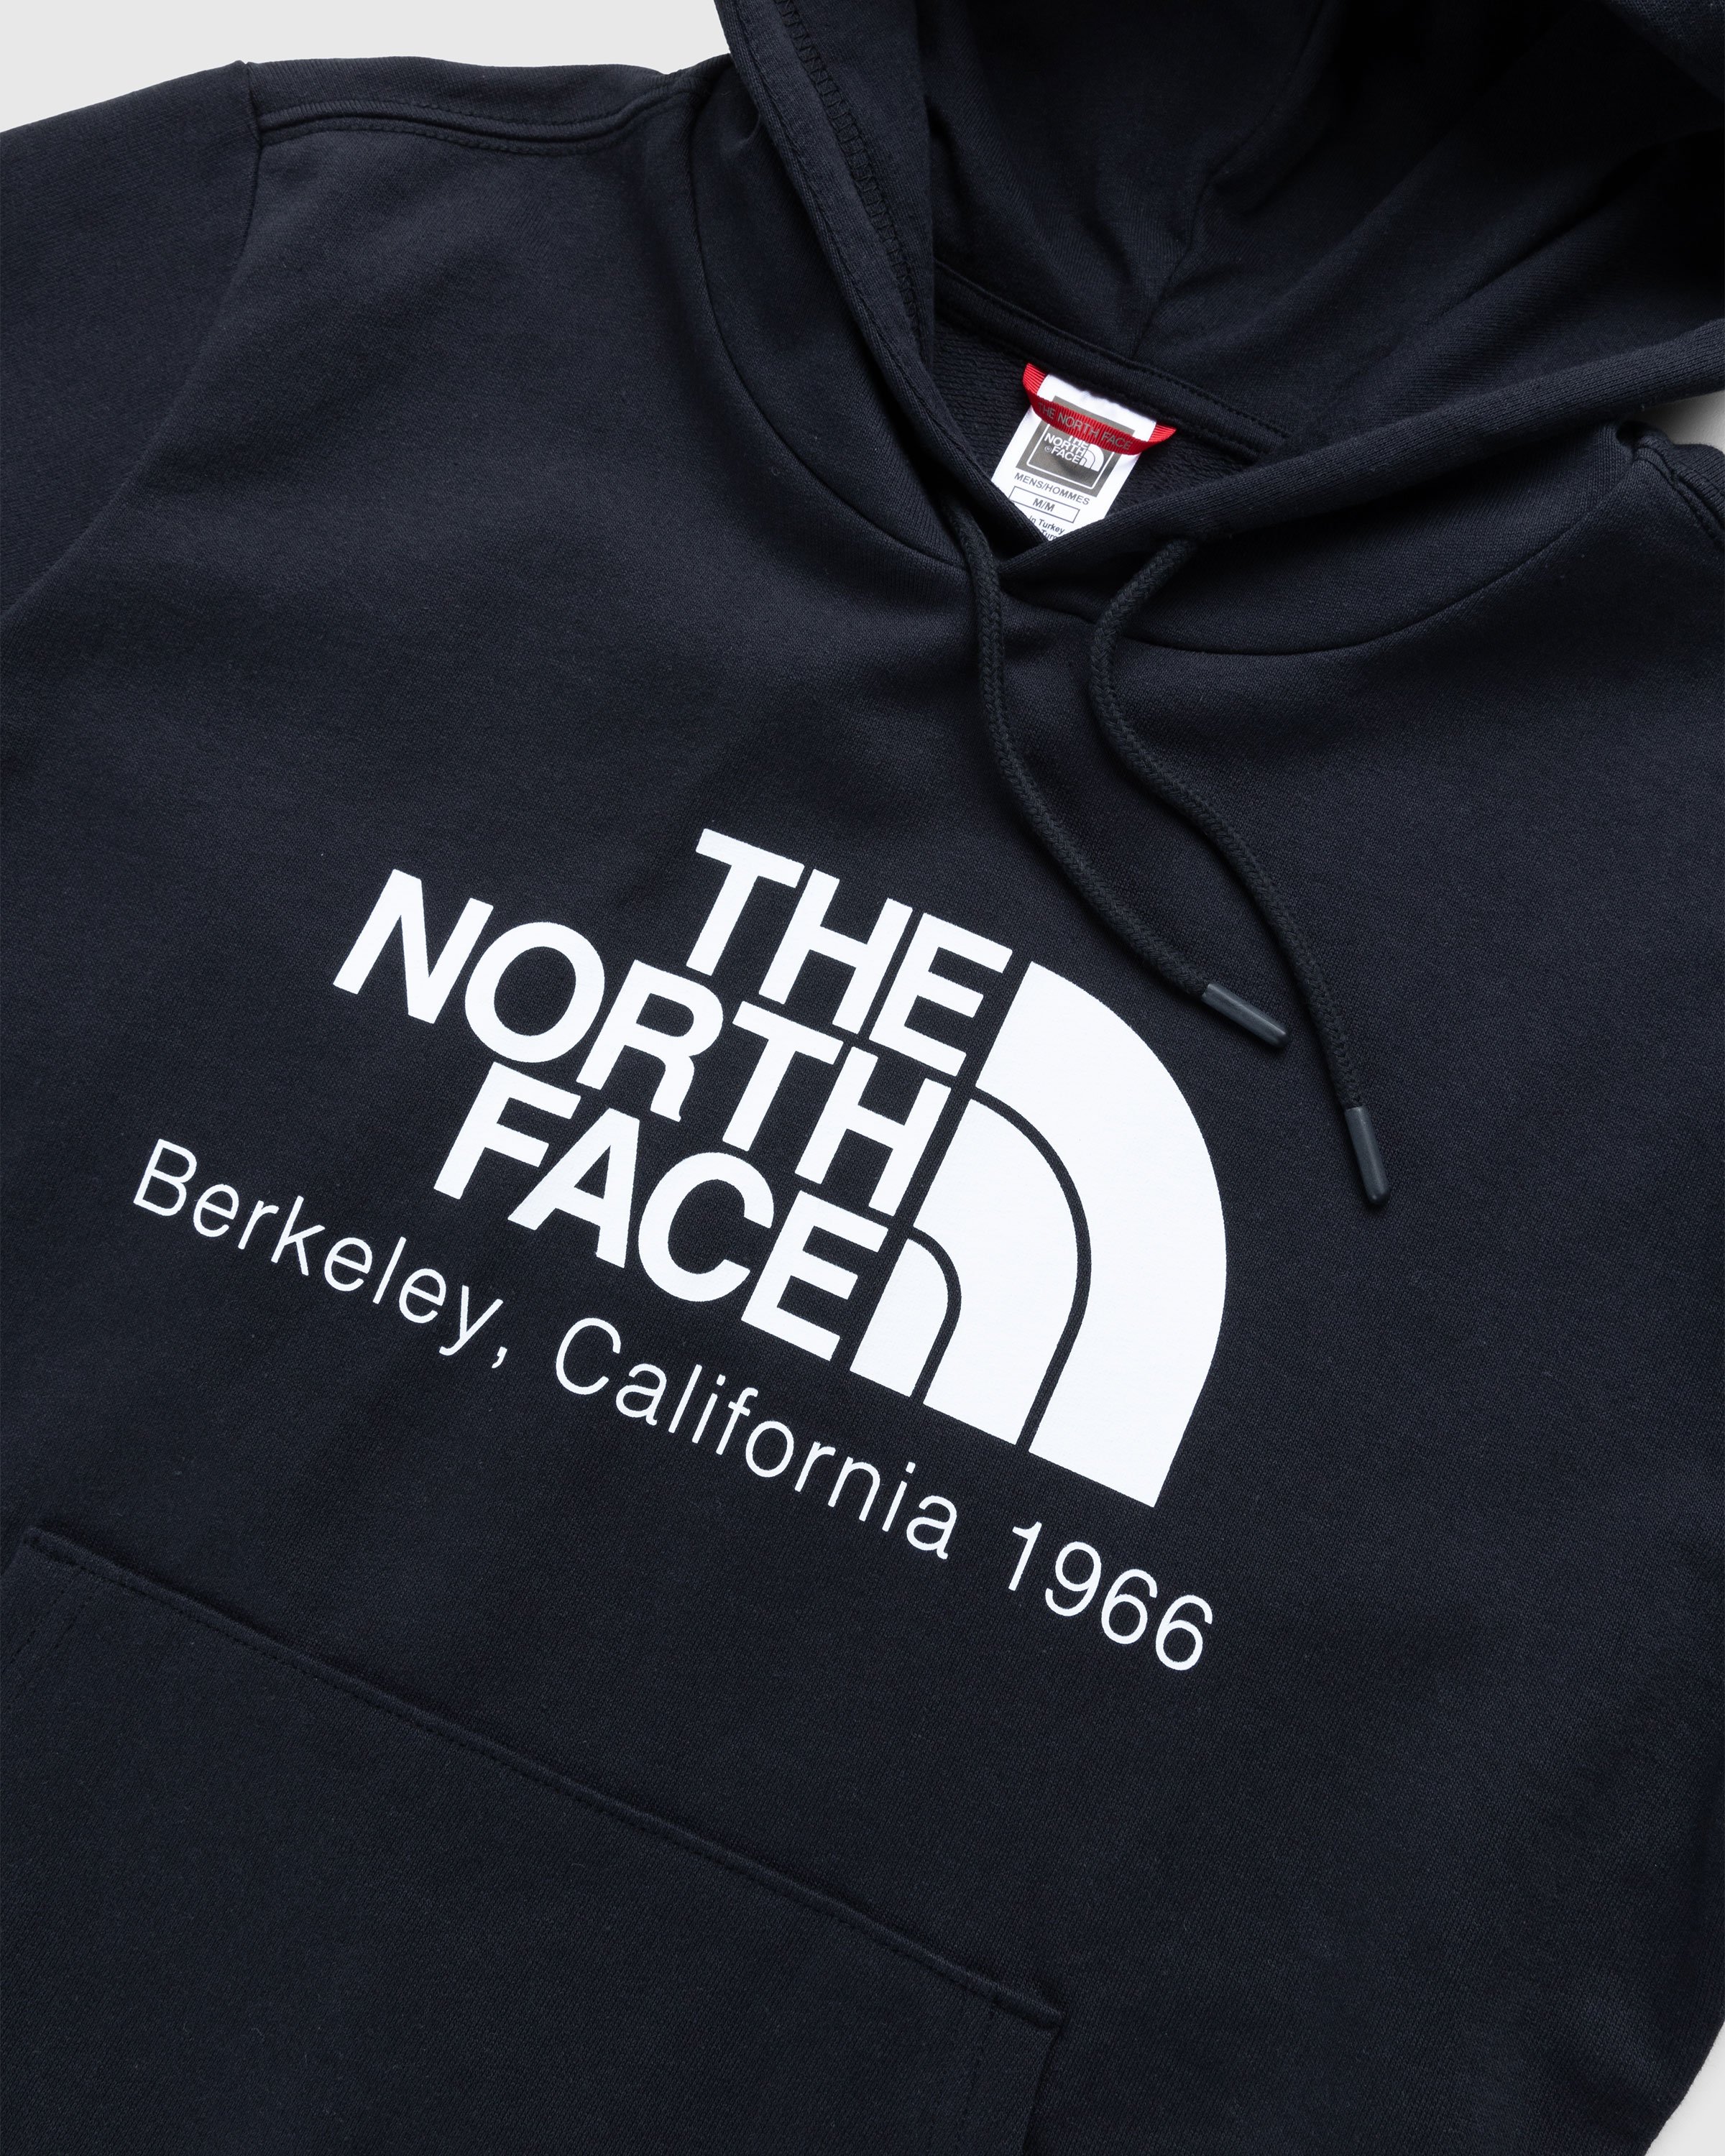 The North Face - Berkeley California Hoodie Black - Clothing - Black - Image 3